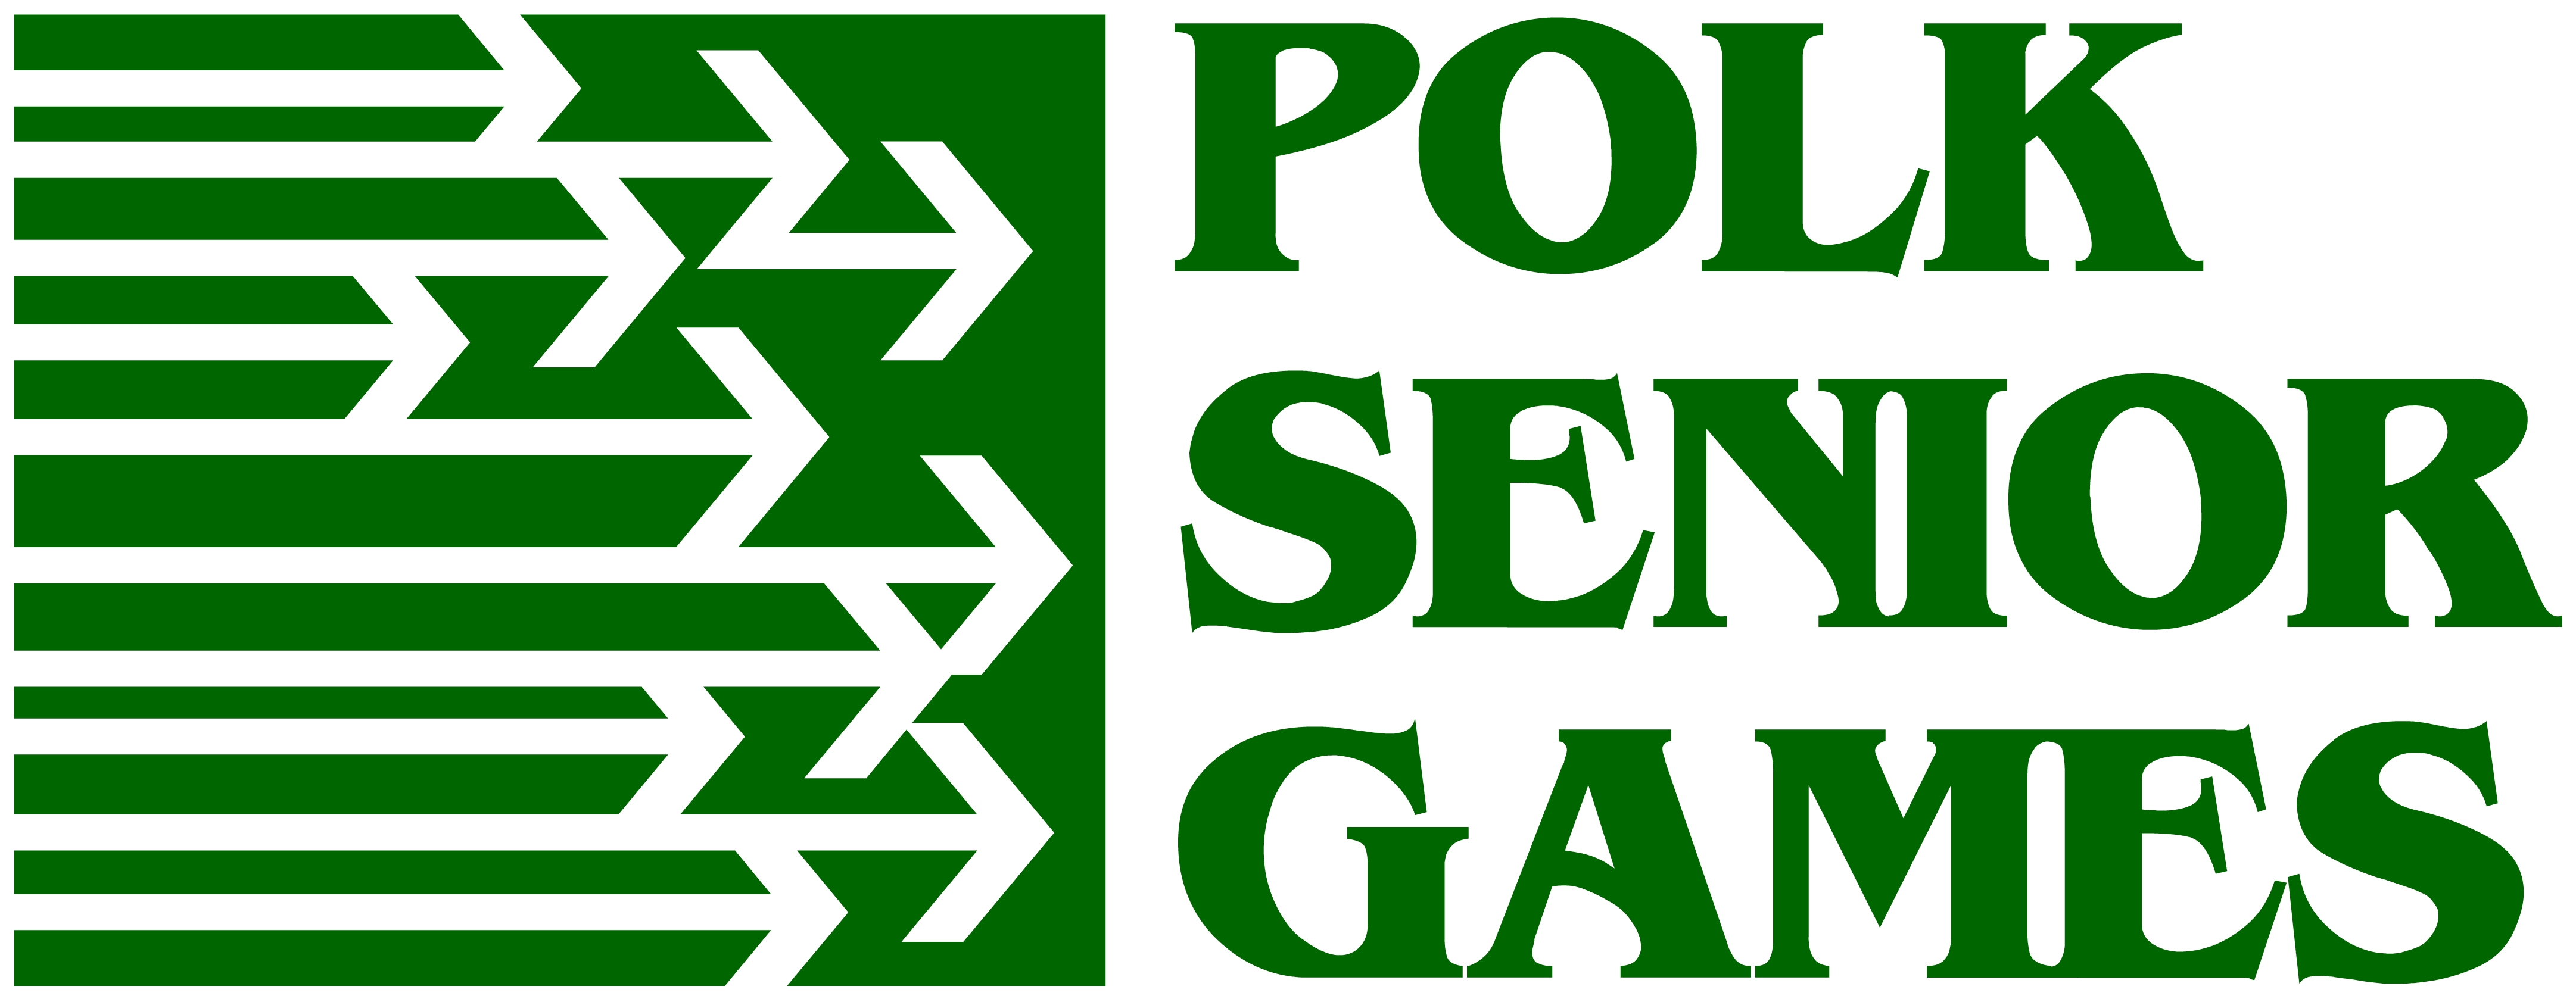 polk senior games